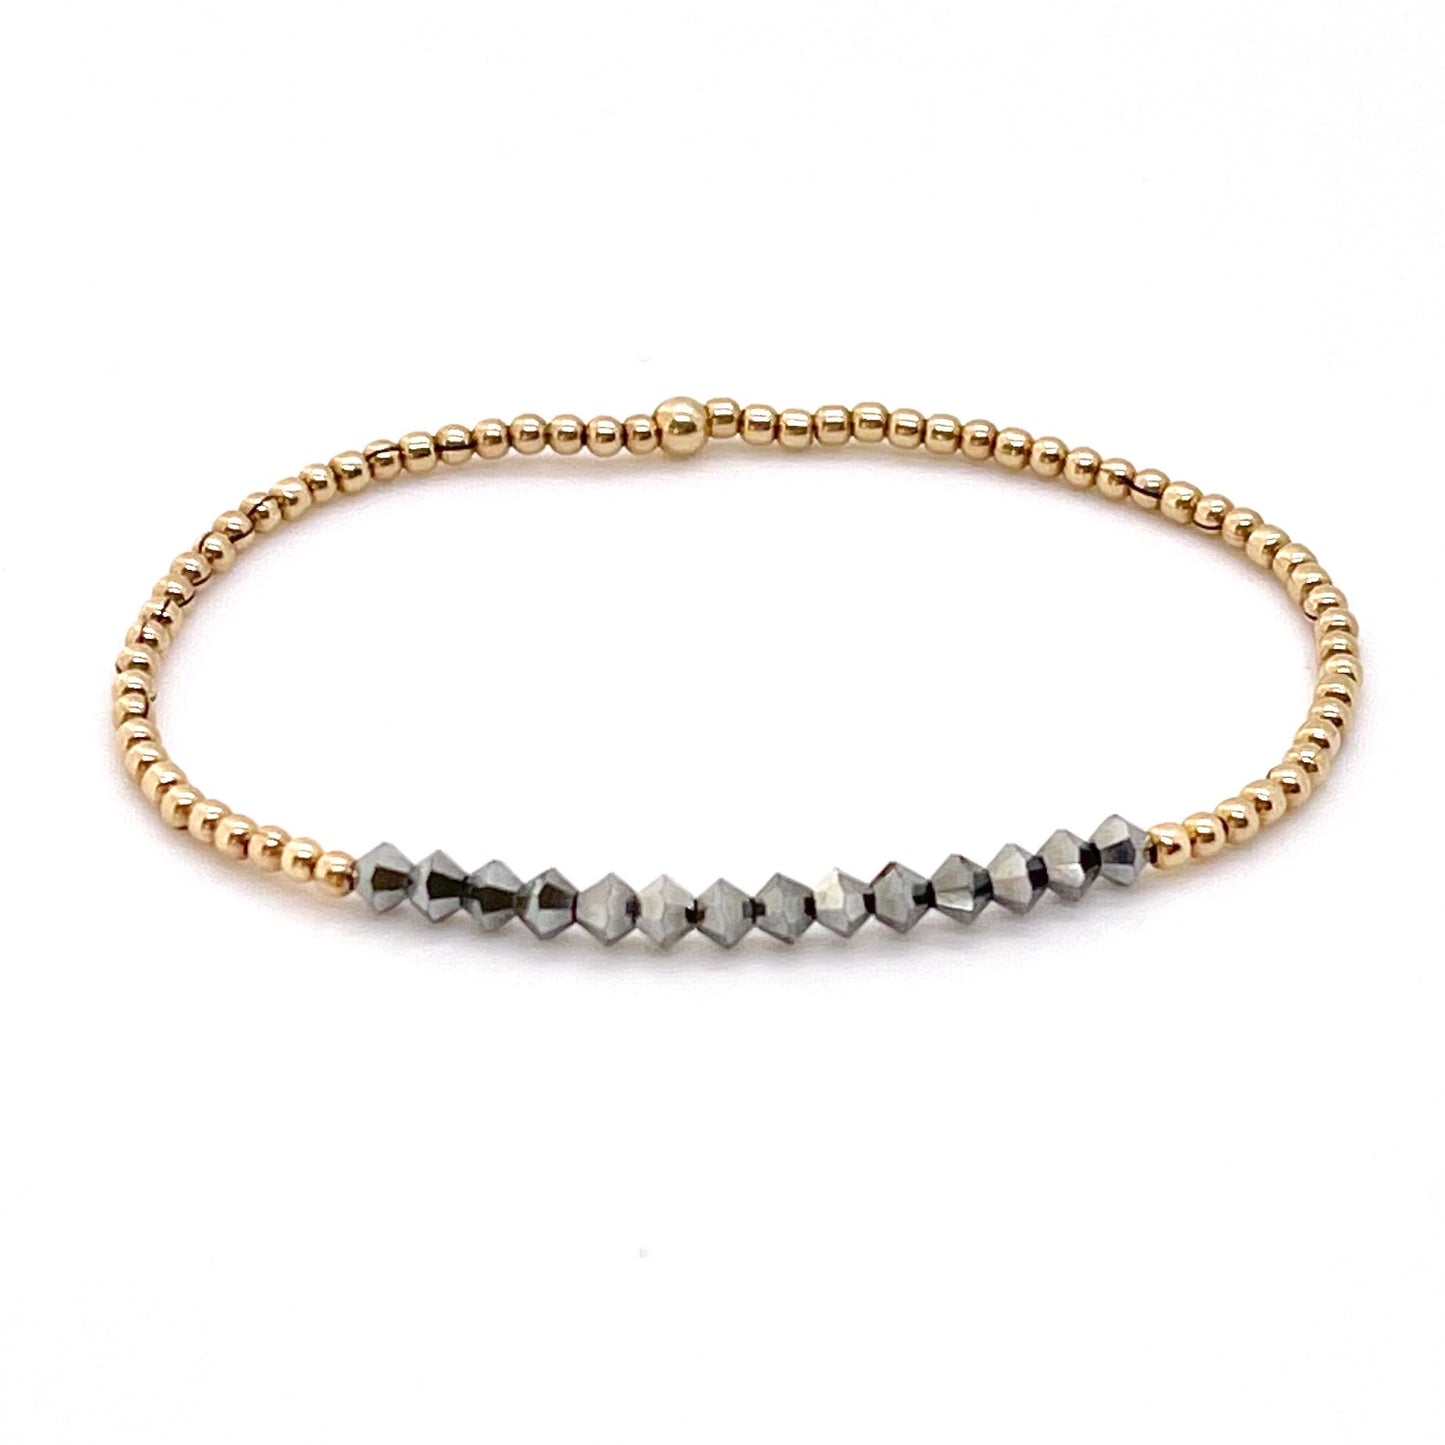 Cyrstal black hematite beads/2mm 14K gold-filled ball bead waterproof stretch bracelet.